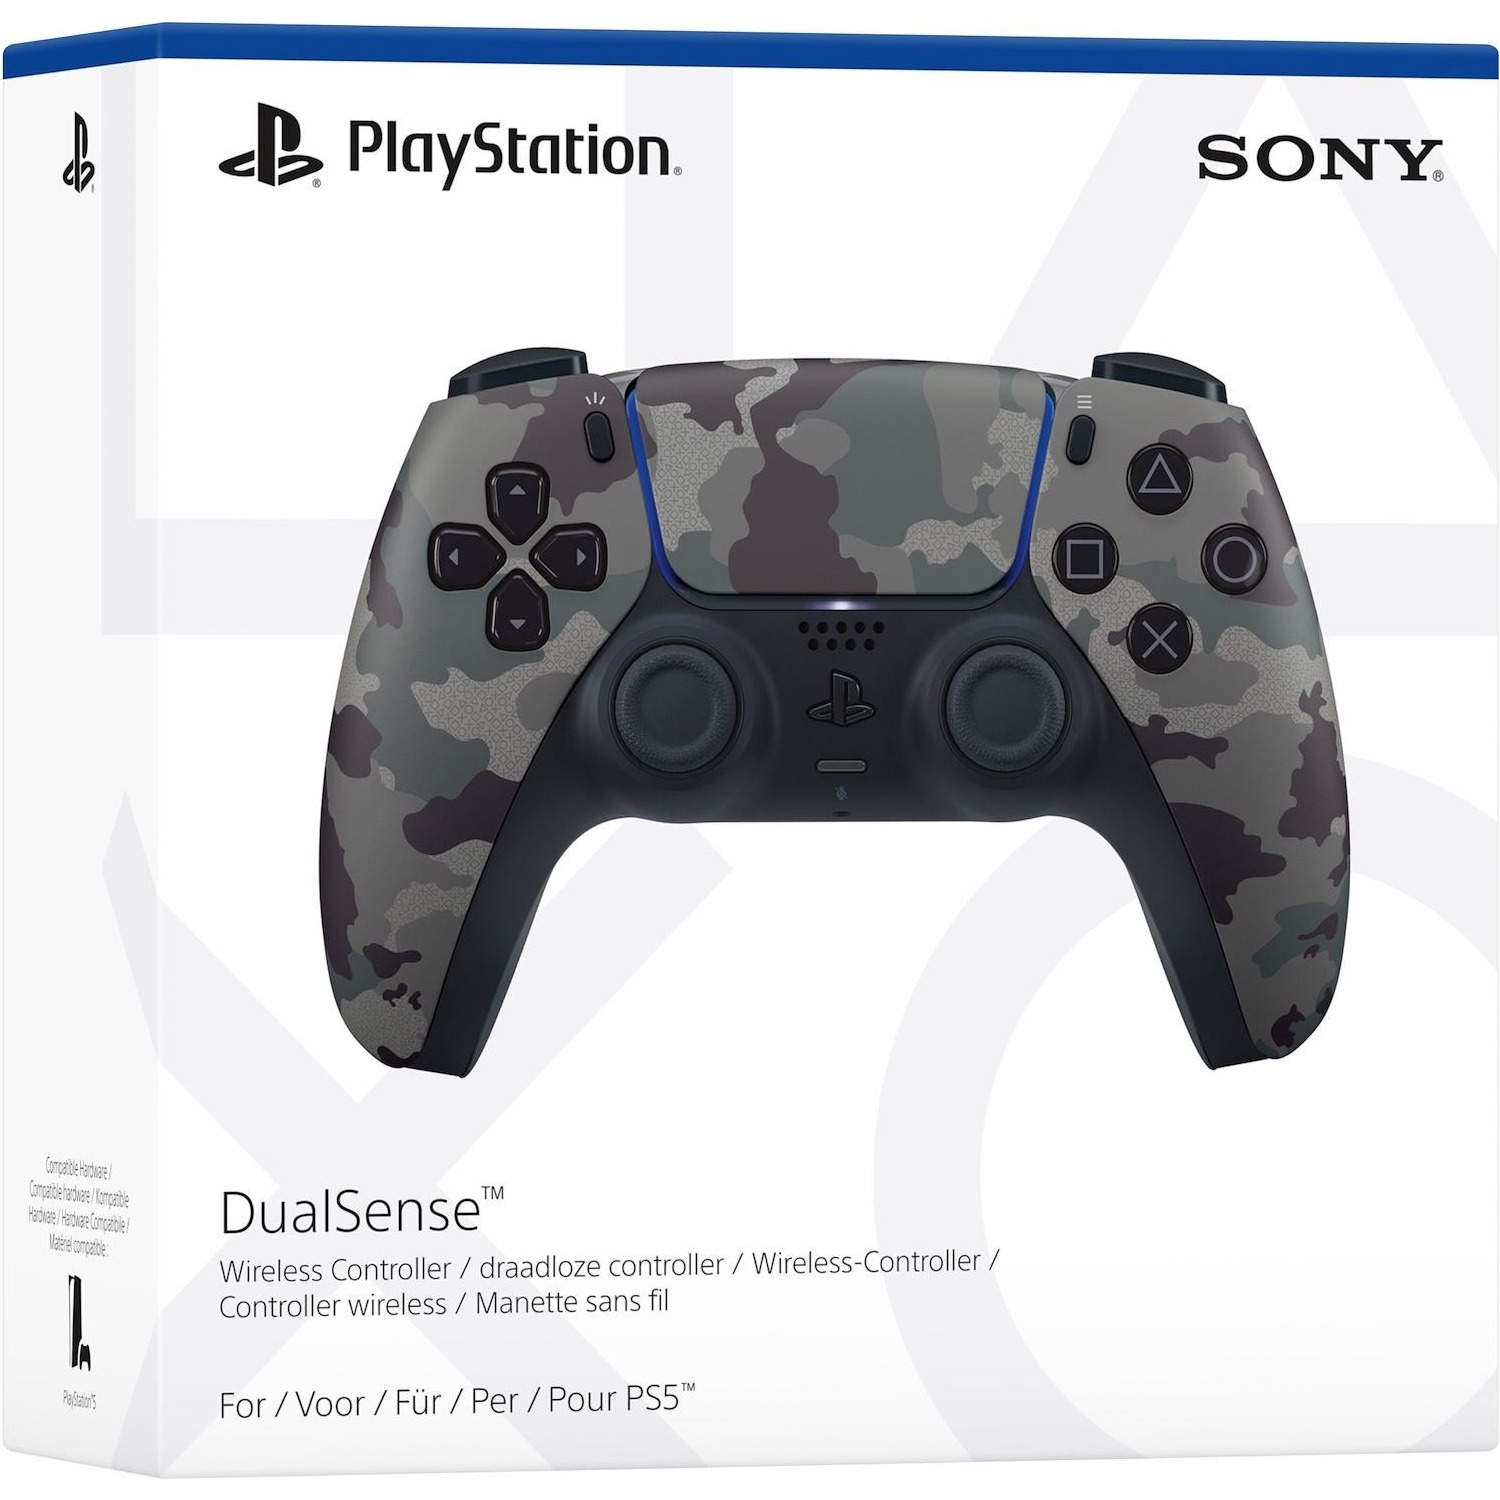 Immagine per PlayStation PS5 PAD DualSense Grey Camo V2 Controller da DIMOStore